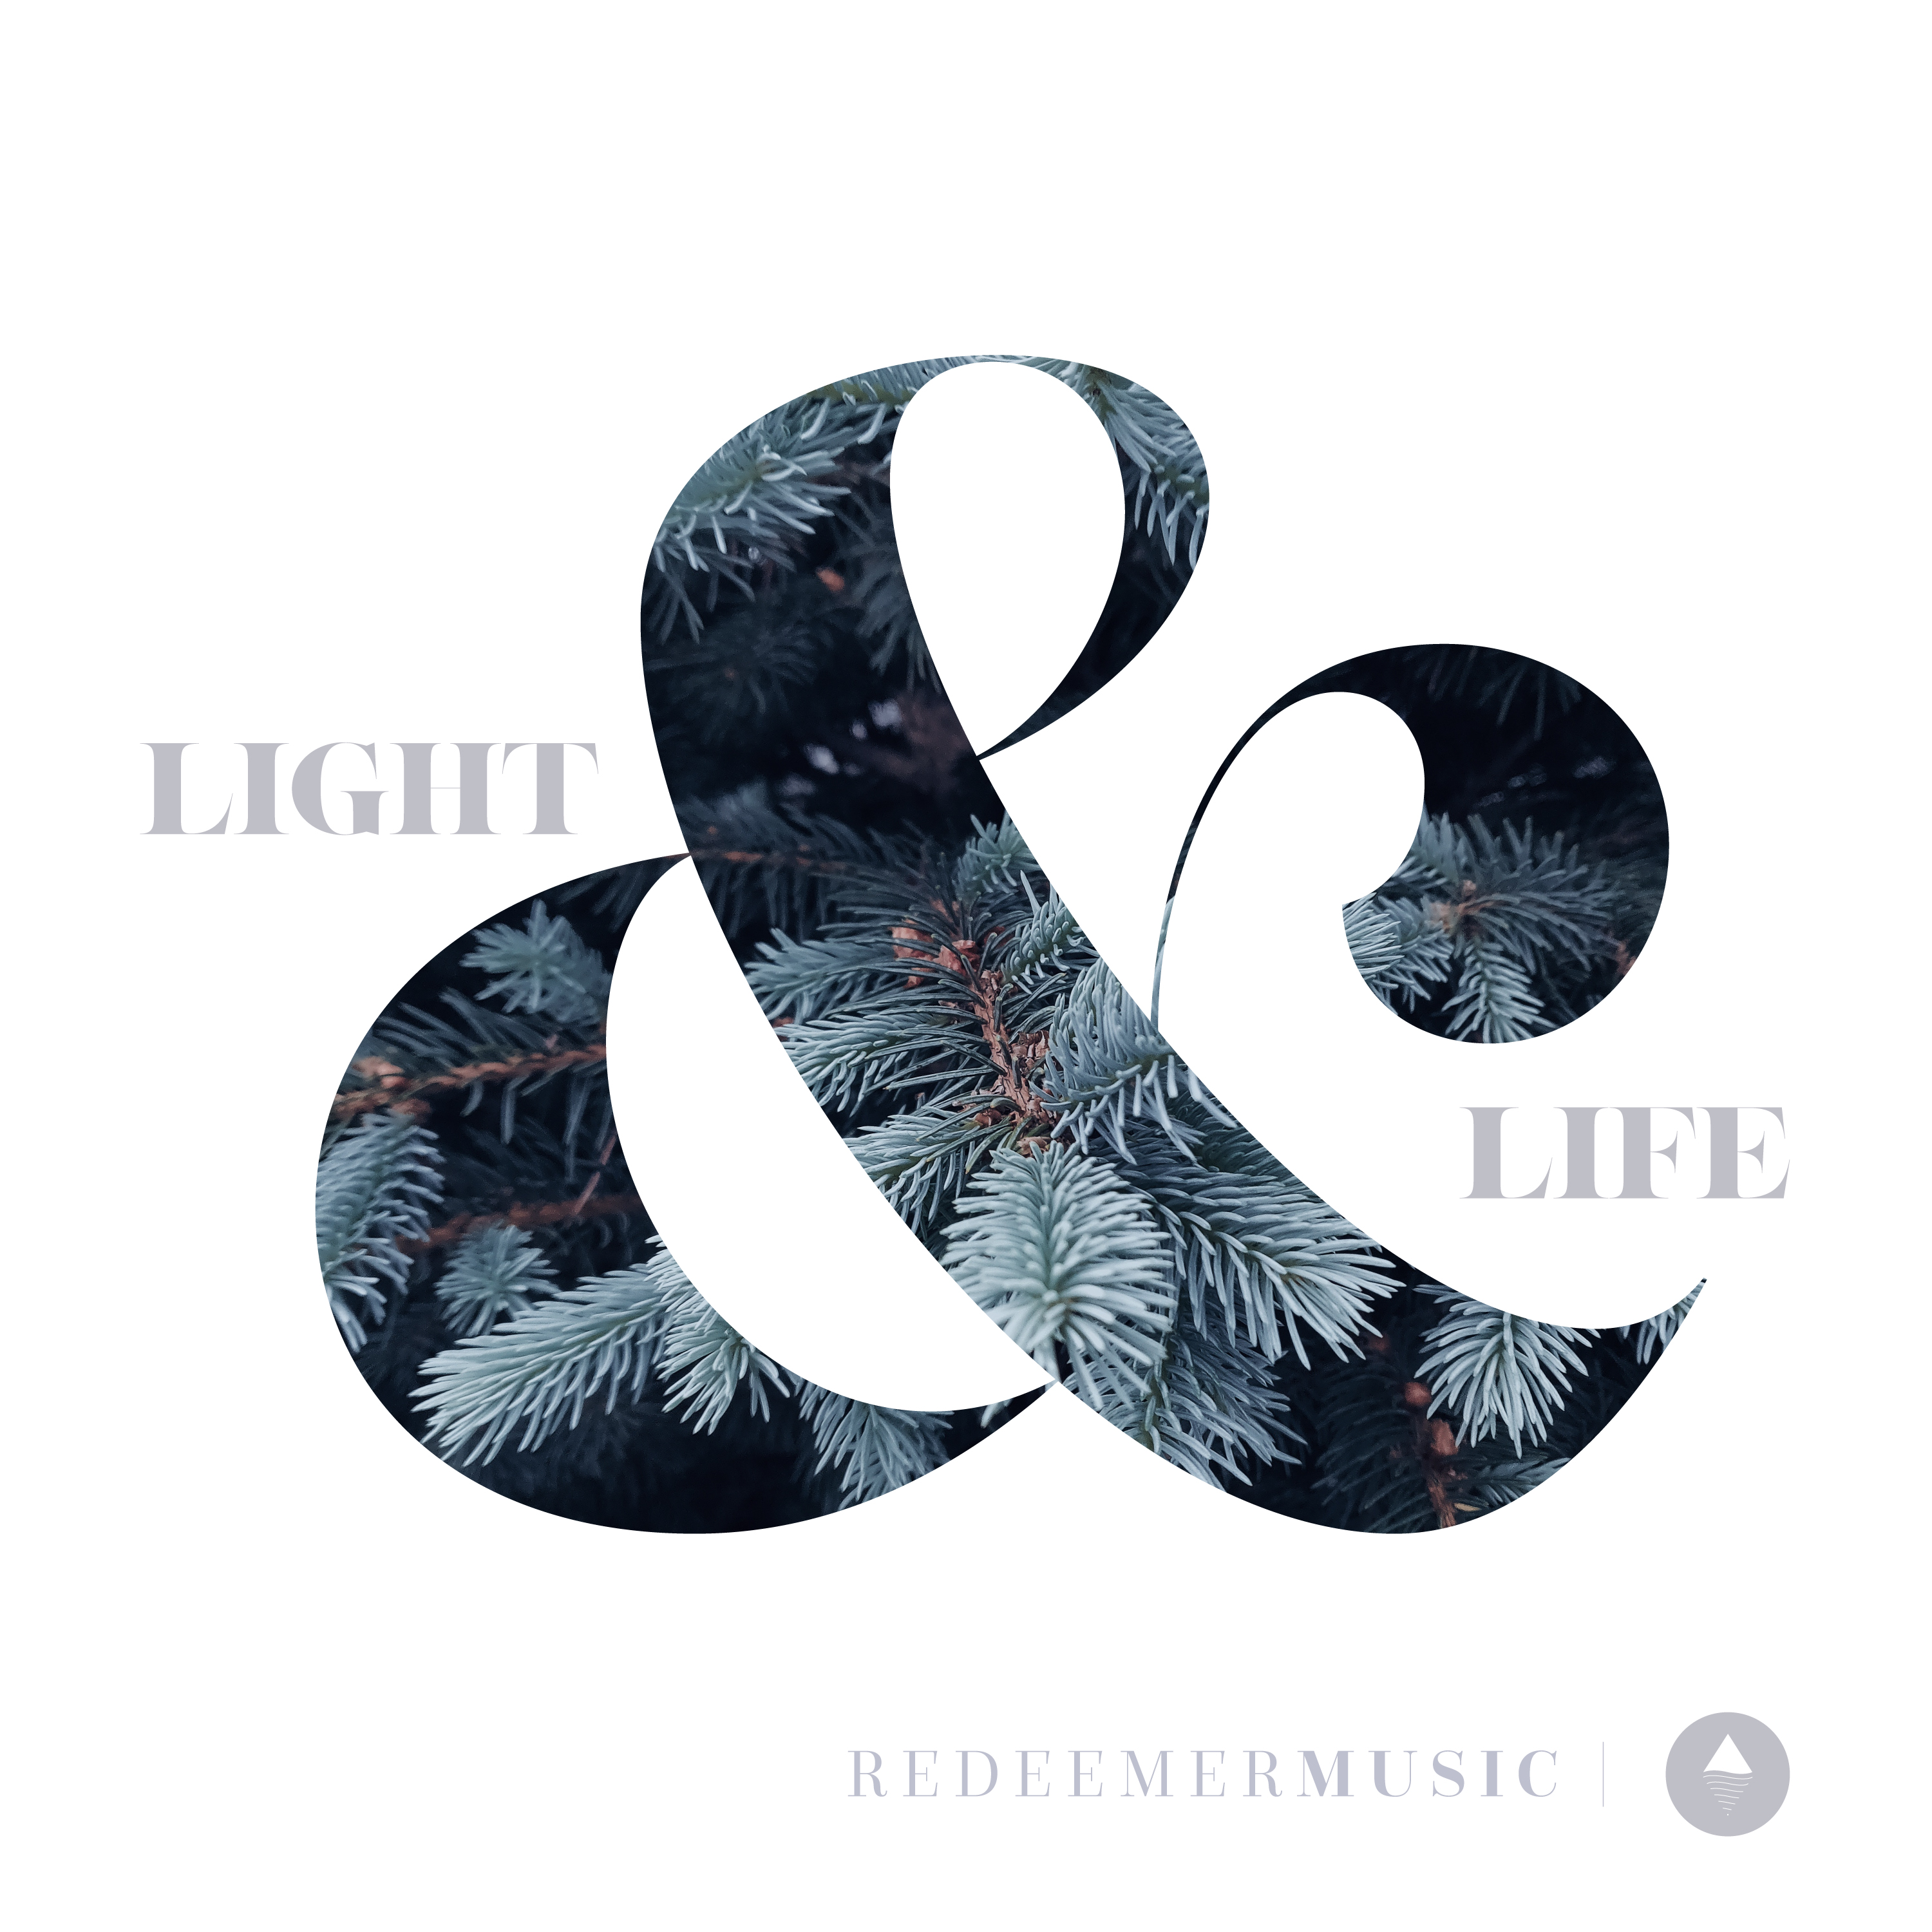 Light-&-Life-Cover